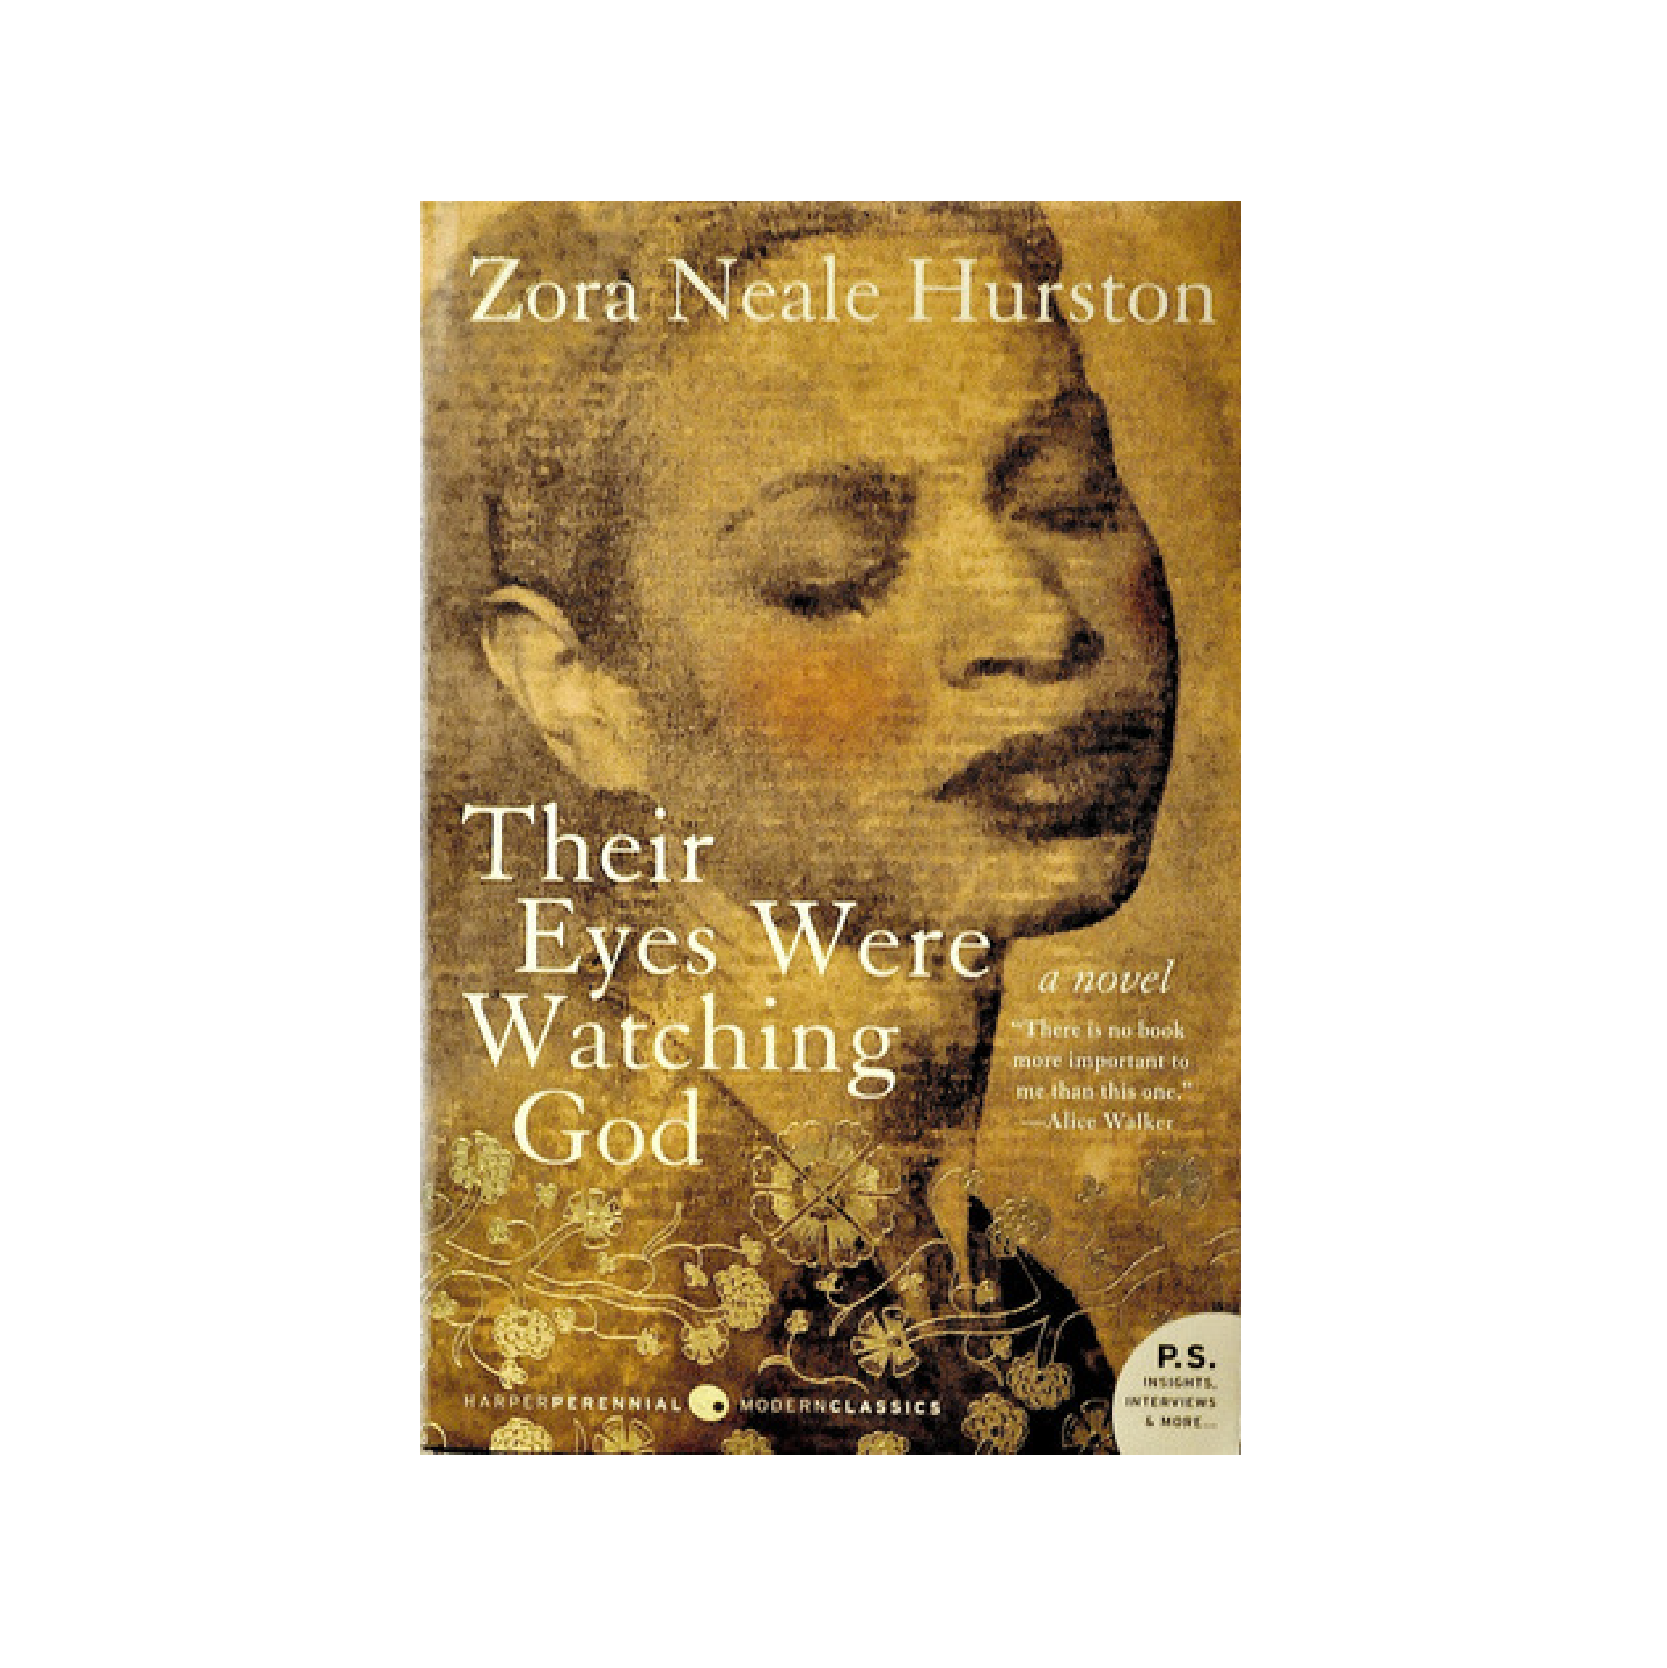 “Their Eyes Were Watching God” by Zora Neale Hurston 